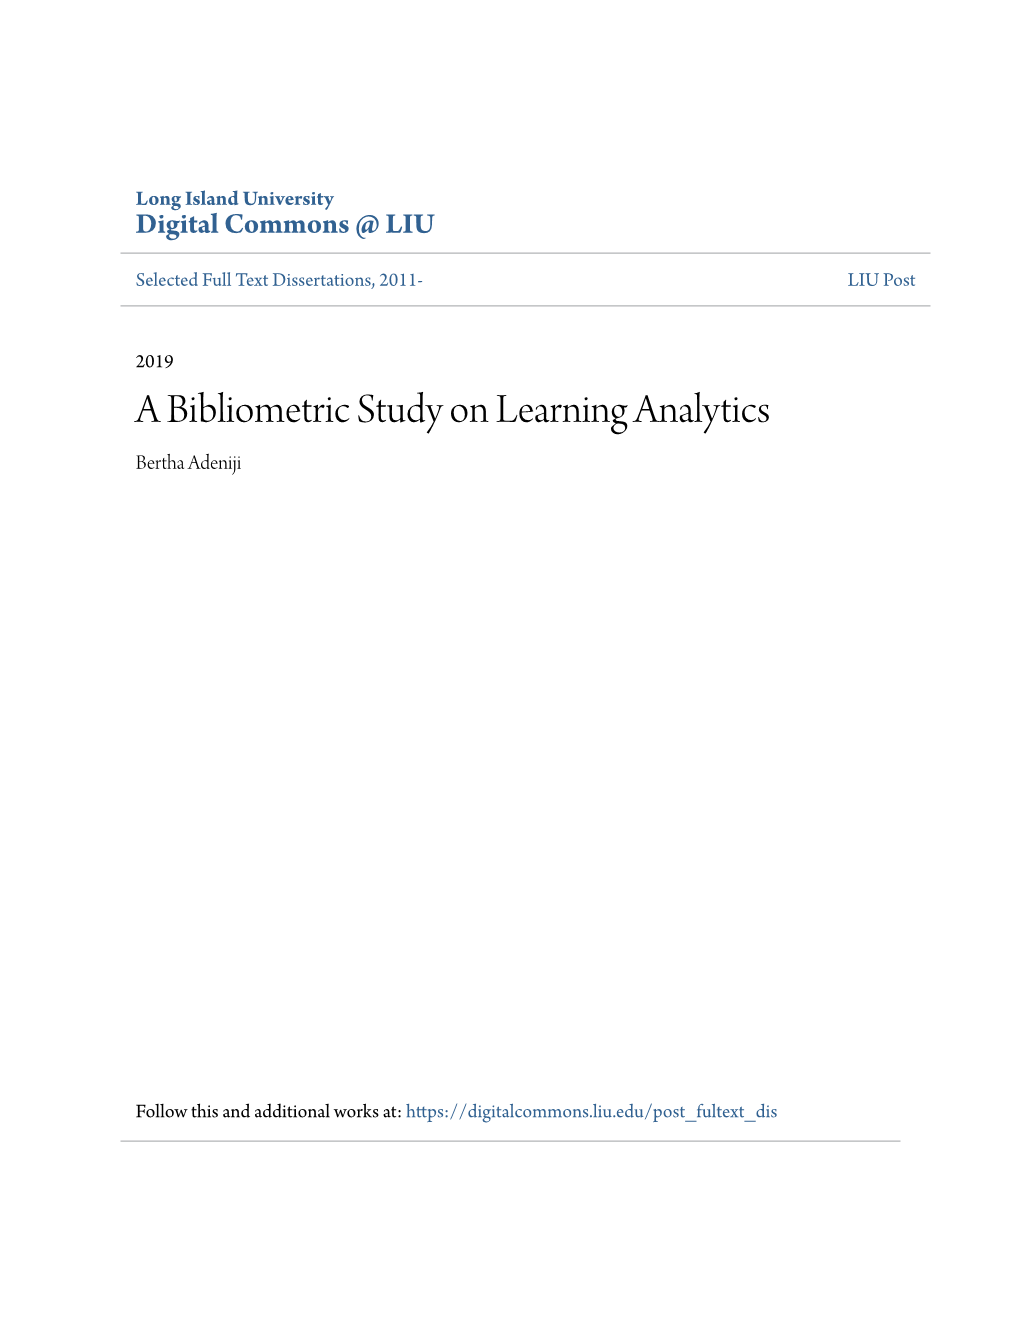 A Bibliometric Study on Learning Analytics Bertha Adeniji